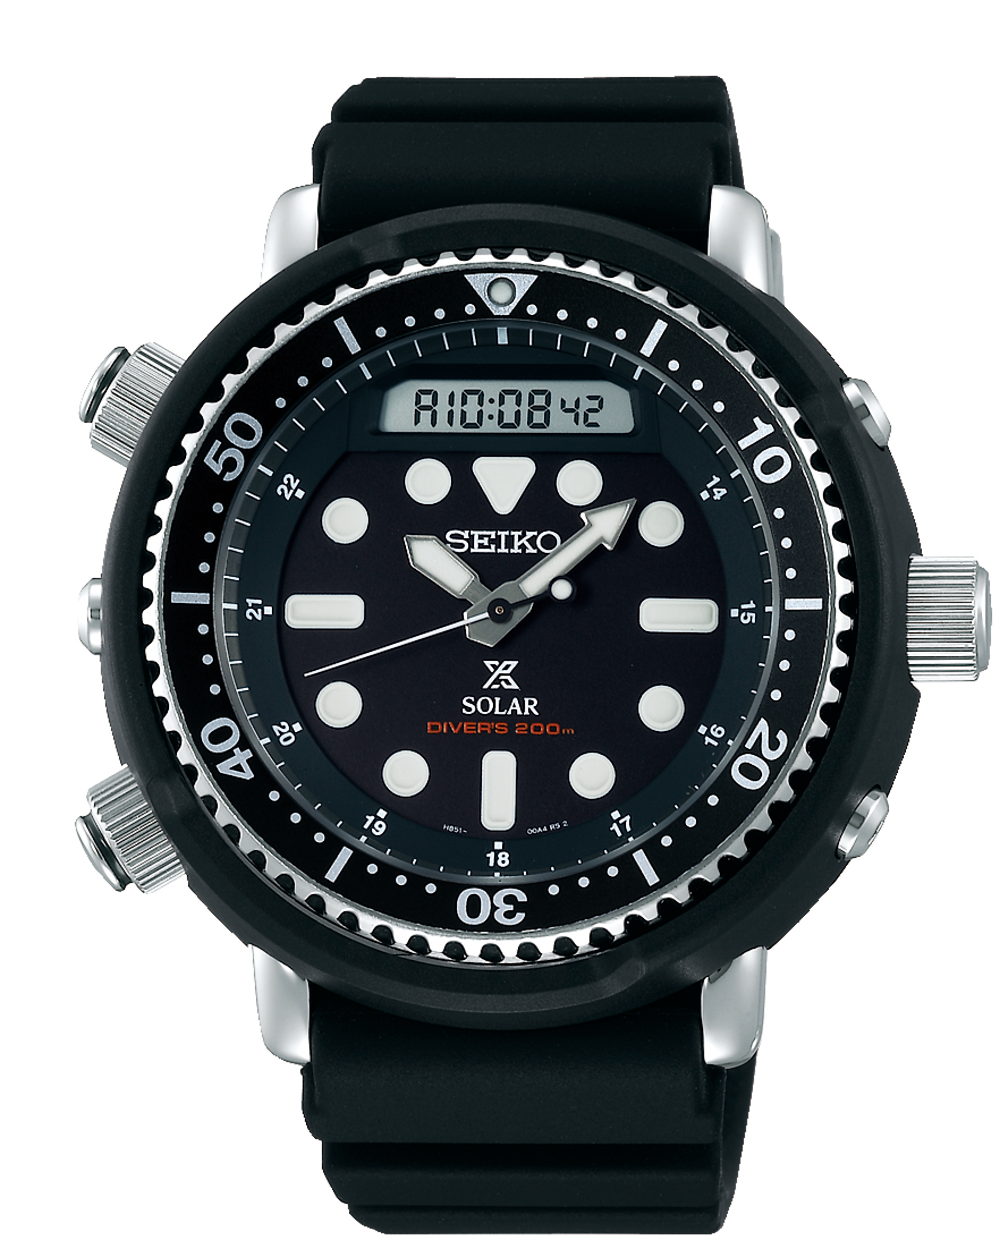 Seiko Prospex Solar Diver's Watch in Black | Prouds